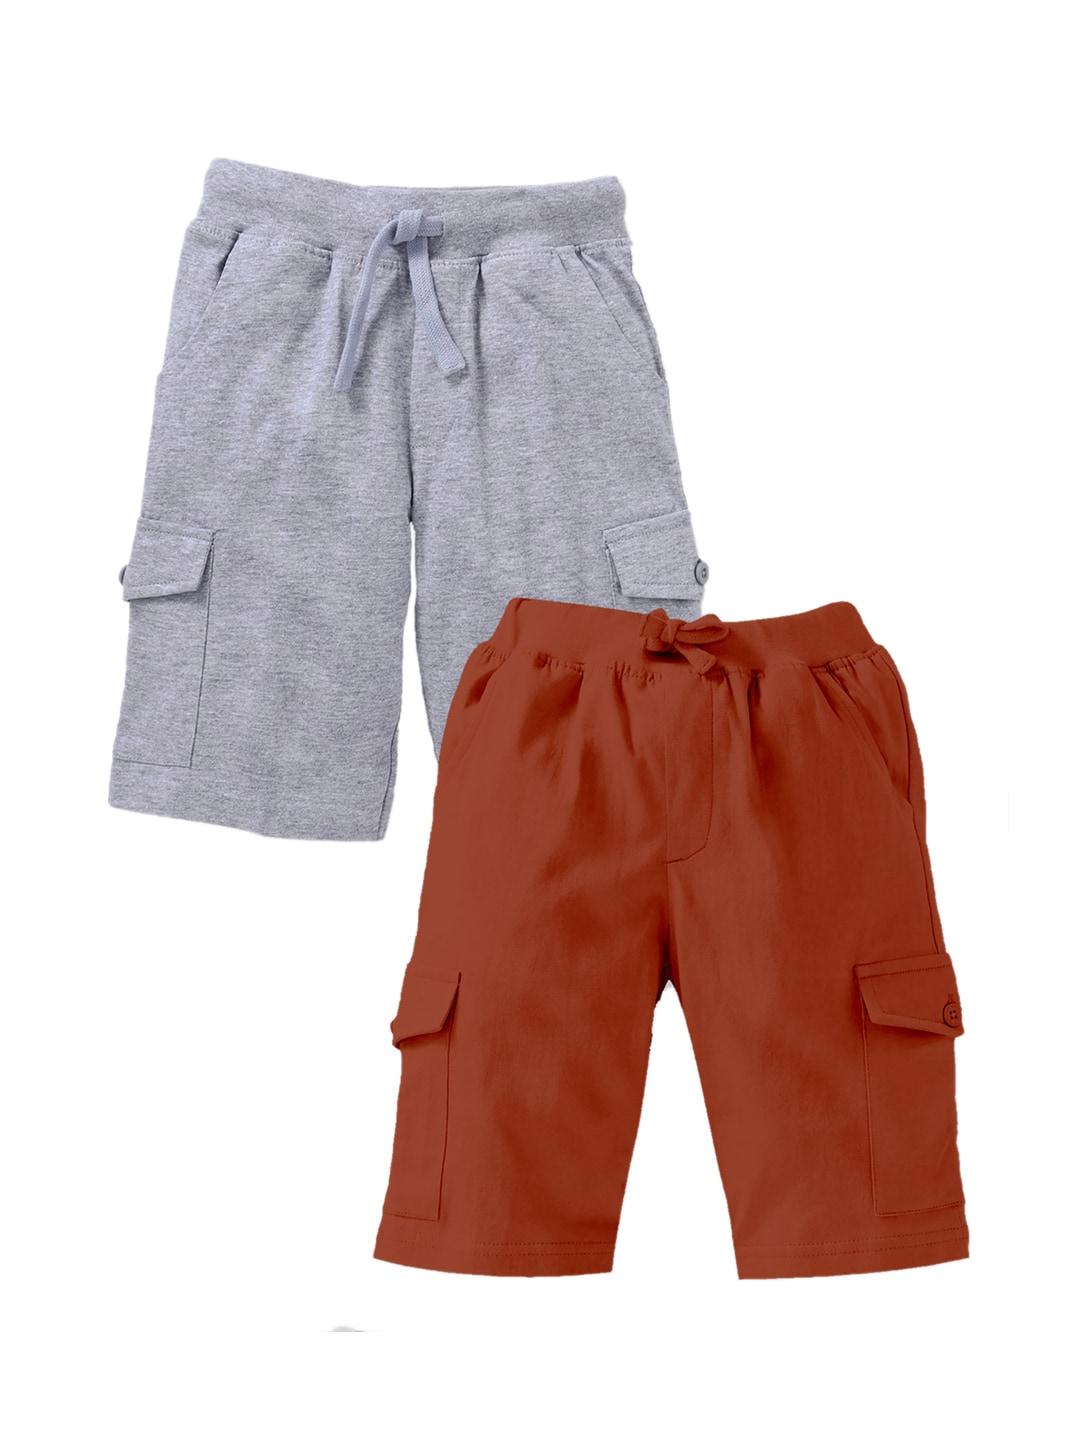 KiddoPanti Boys Pack Of 2 Cargo Cotton Shorts